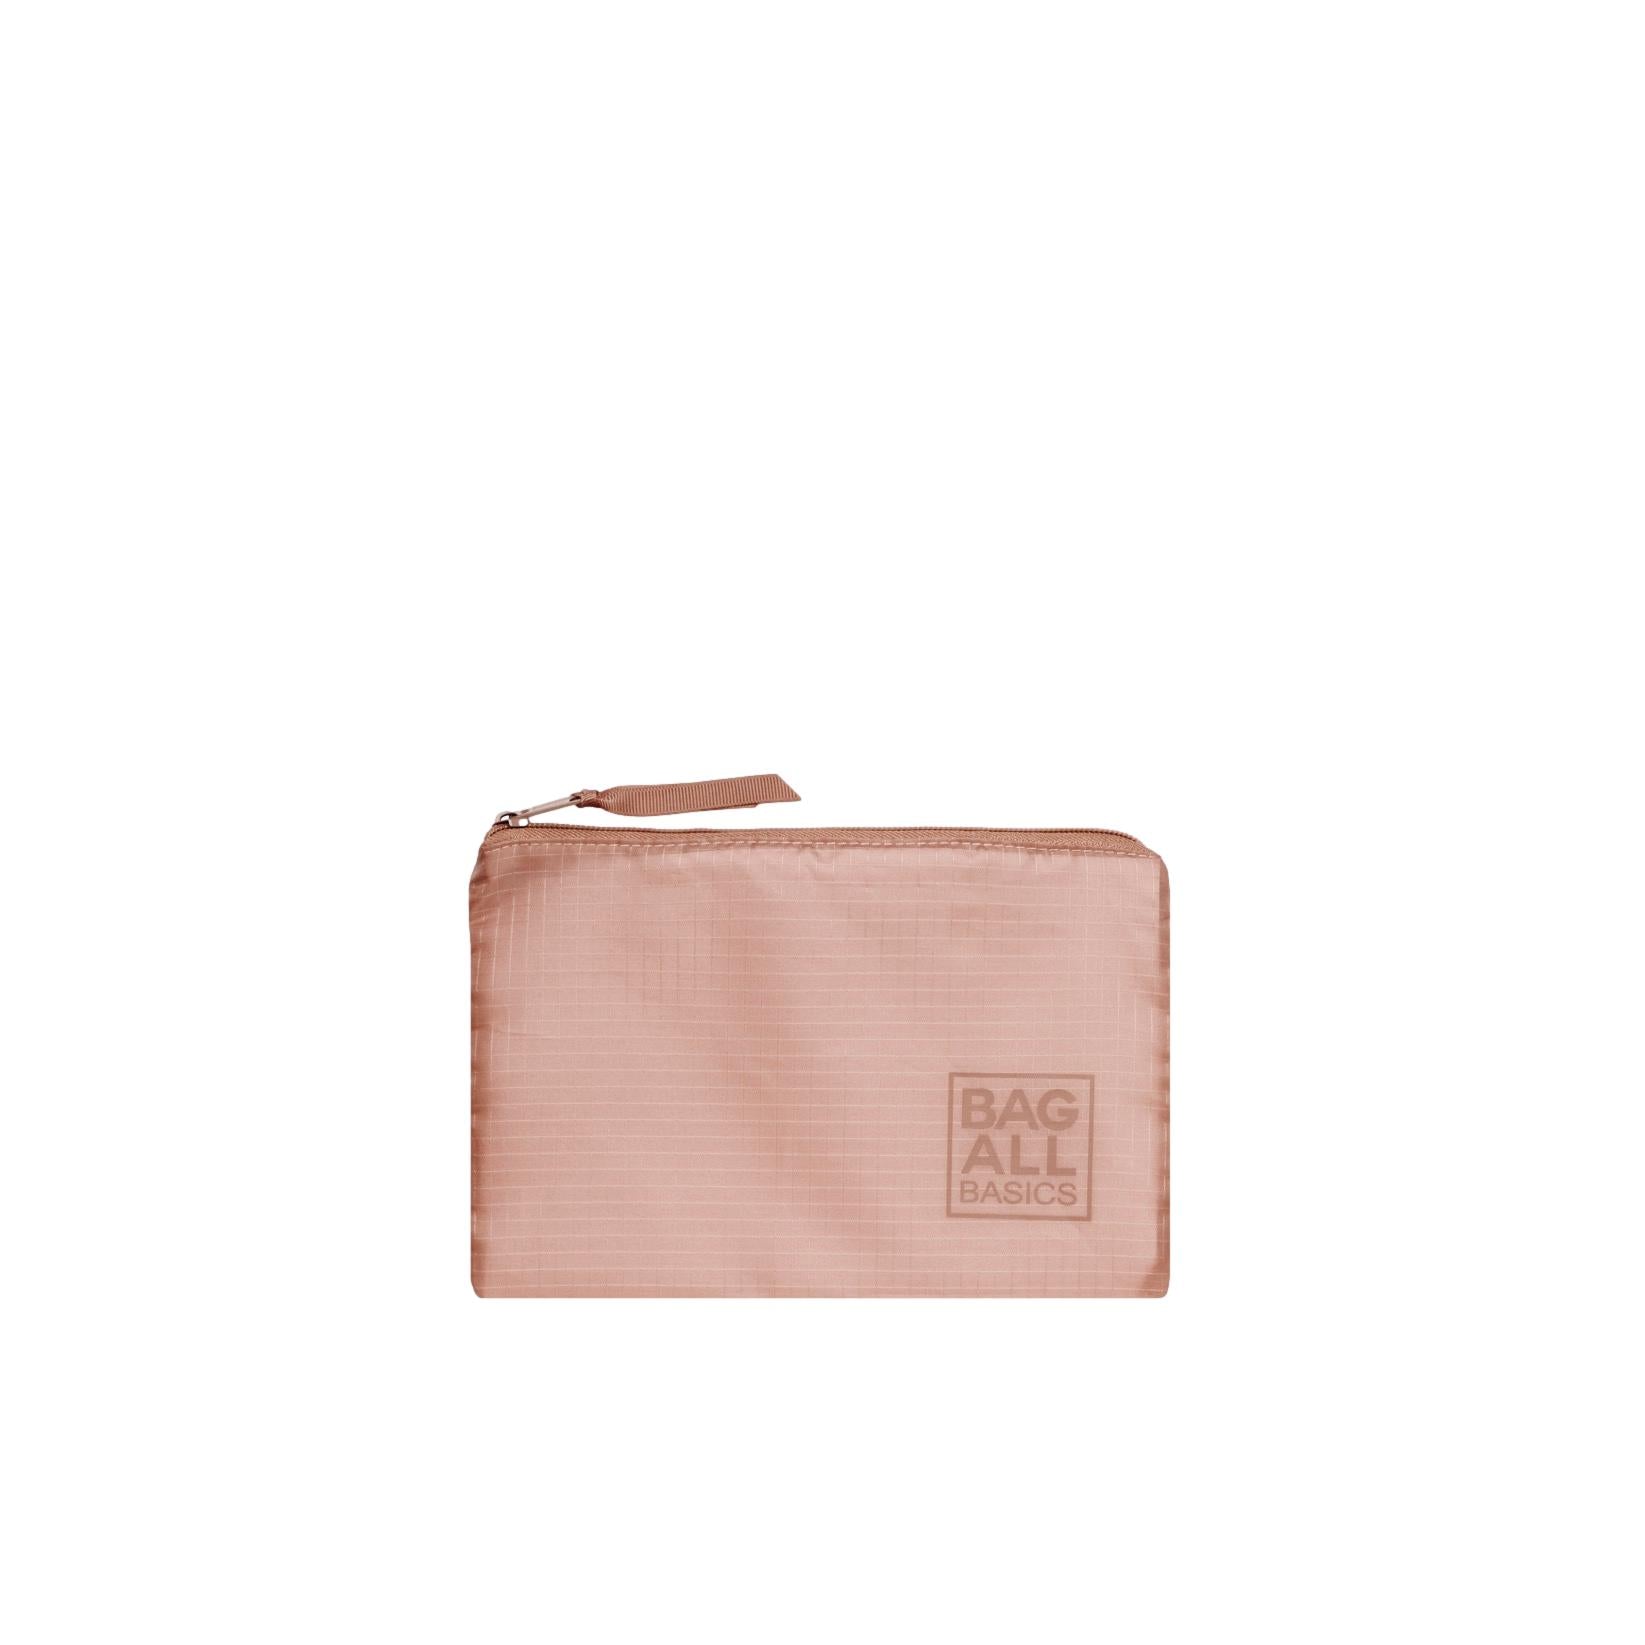 Bag-all Basic Packing Bags Set, 8-pack, Pink/Blush | Bag-all